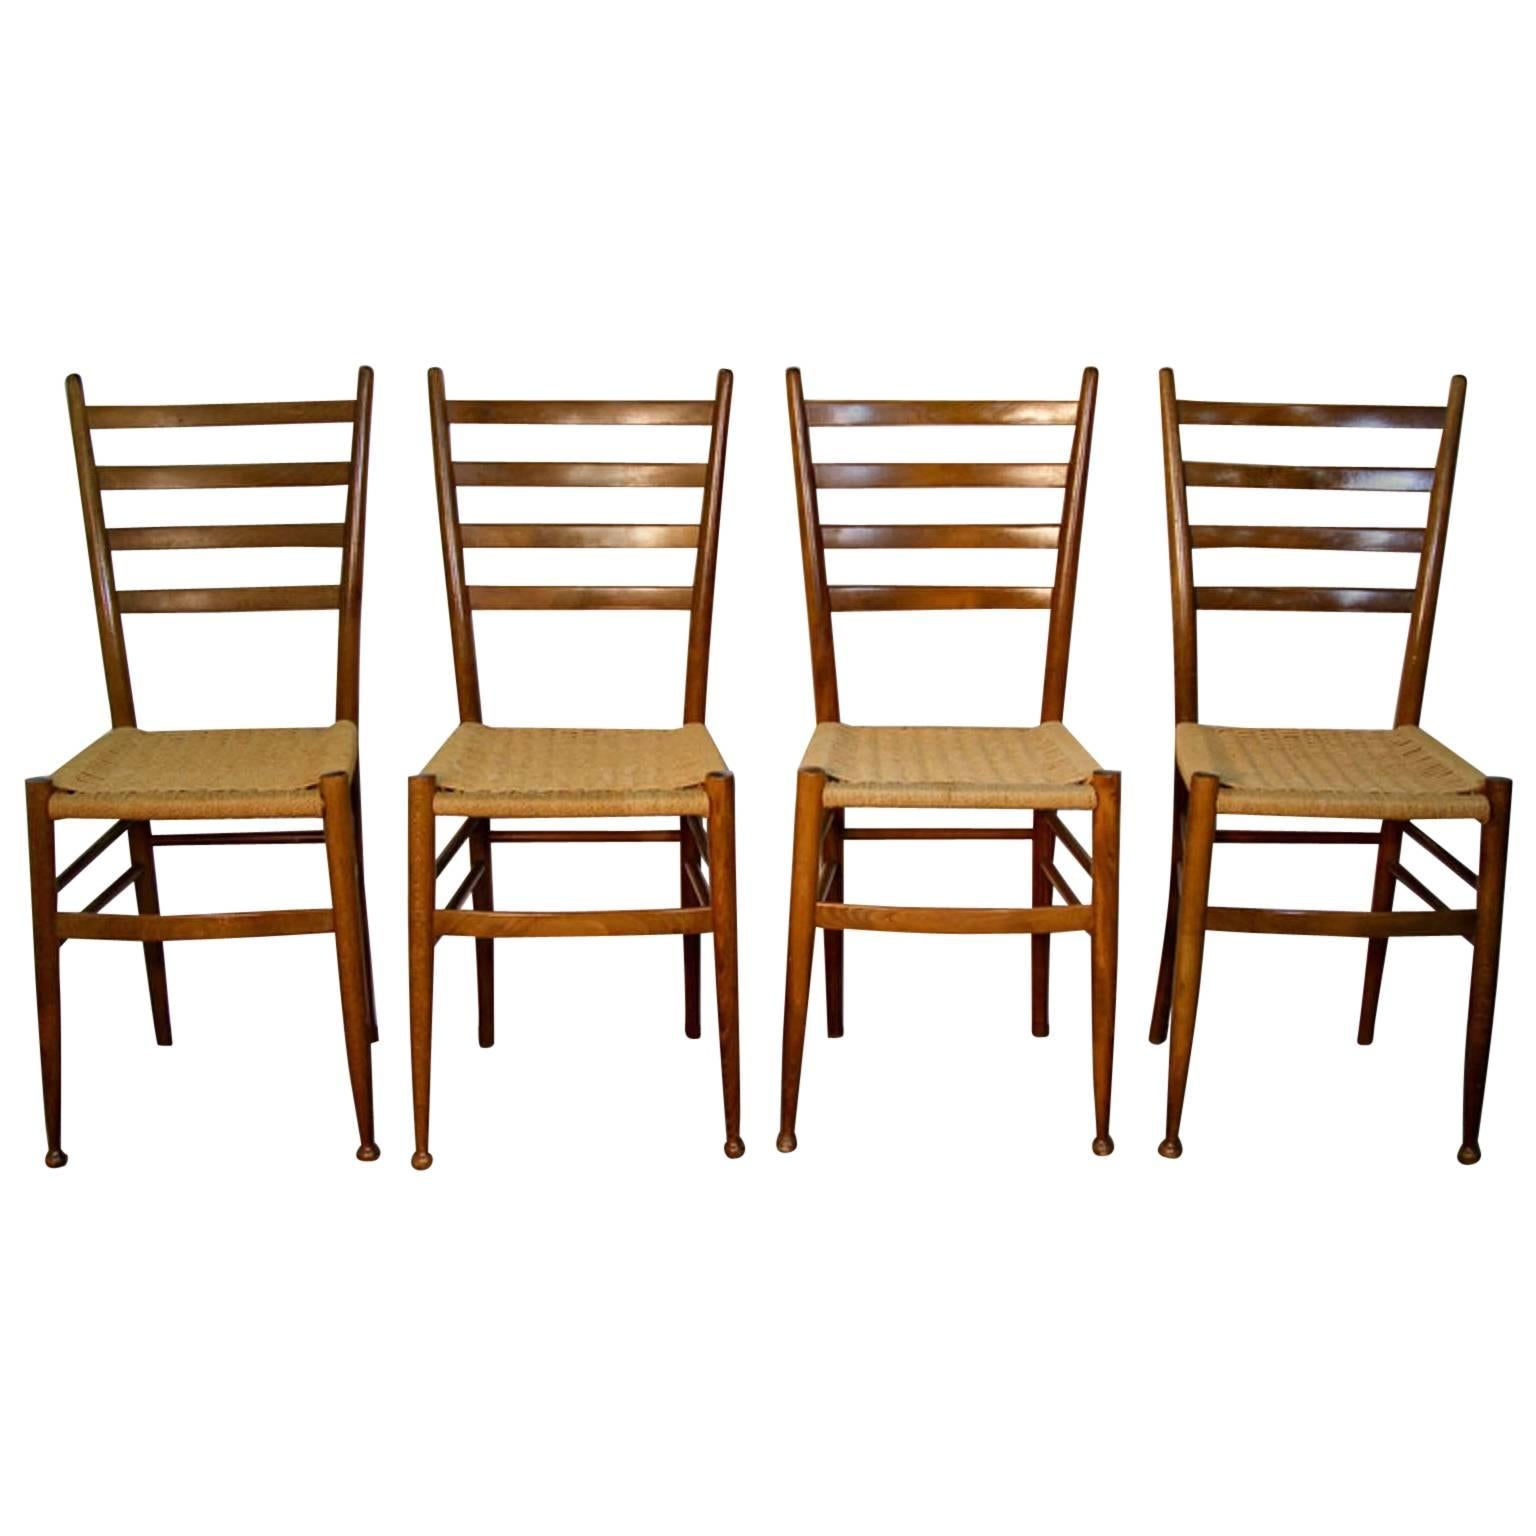 Four Mid-Century Minimal Dining Chairs